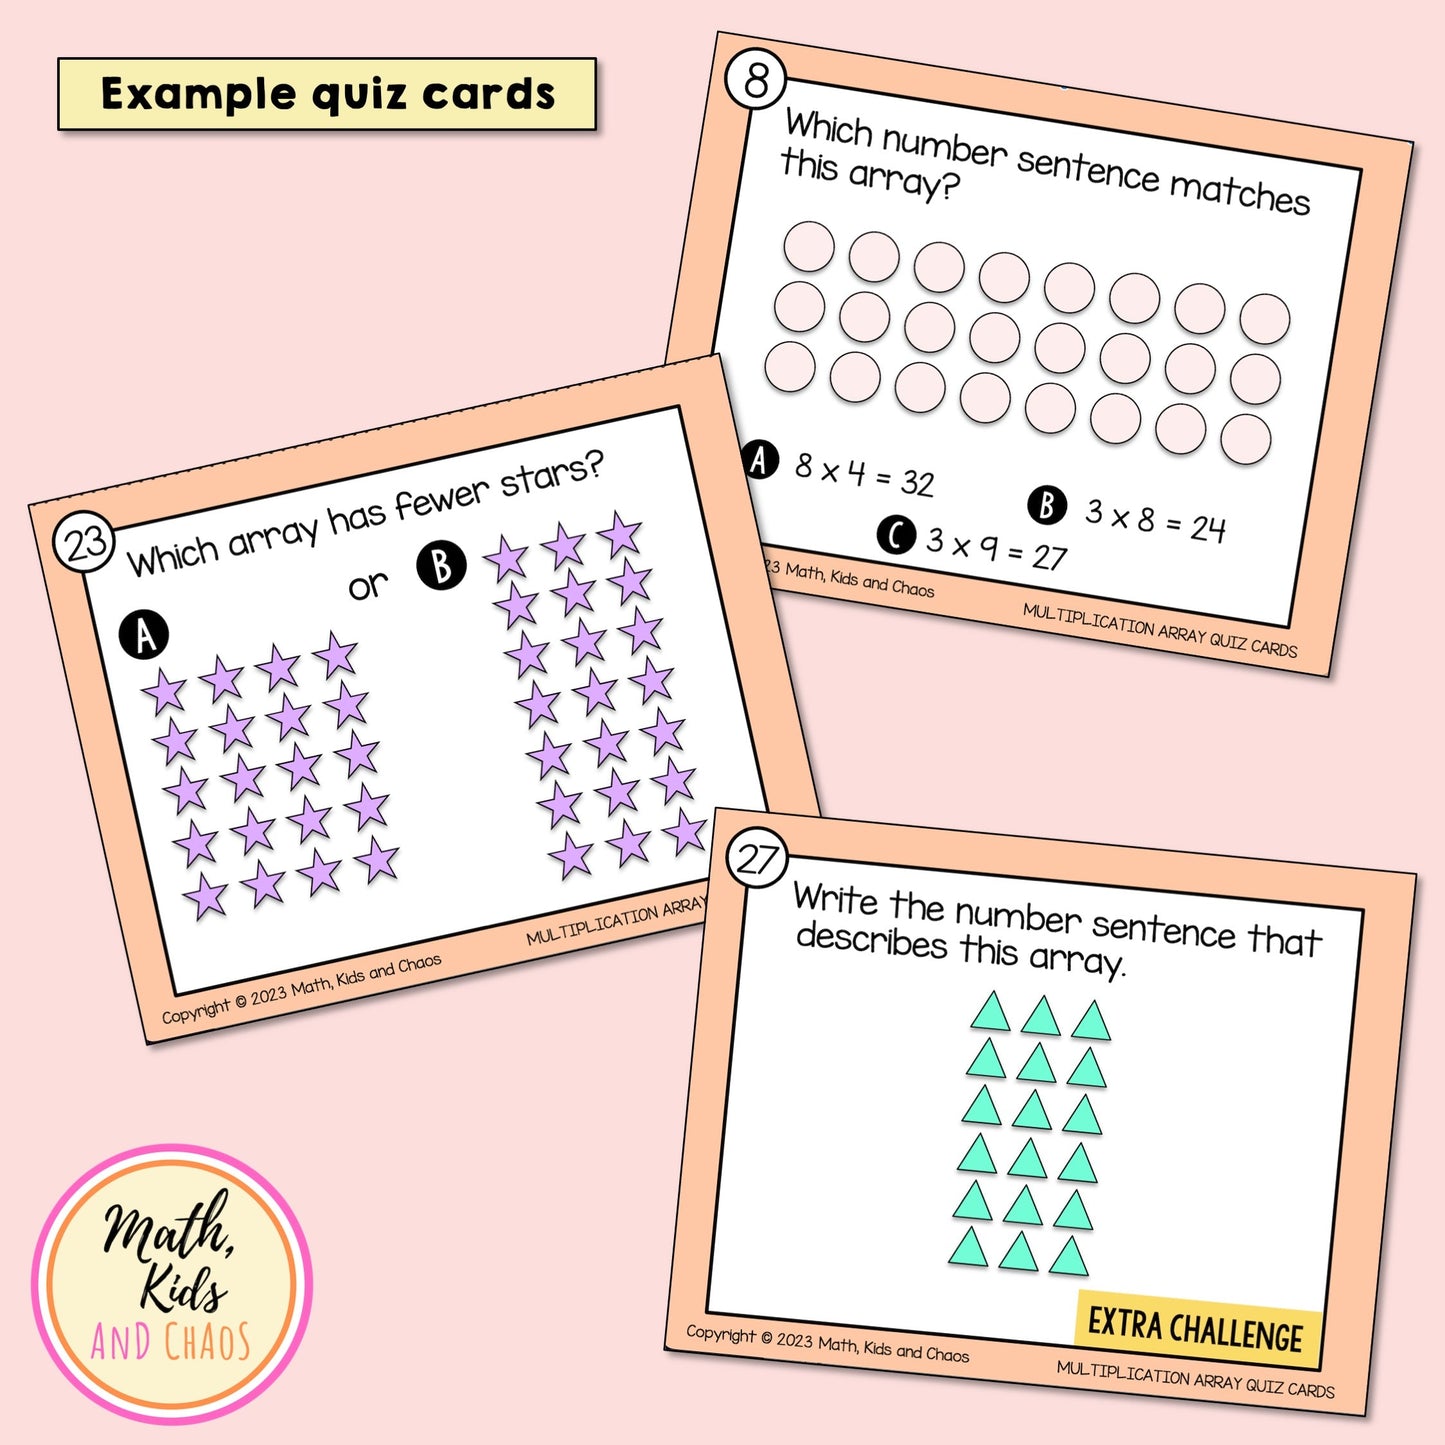 Multiplication Array Quiz Cards